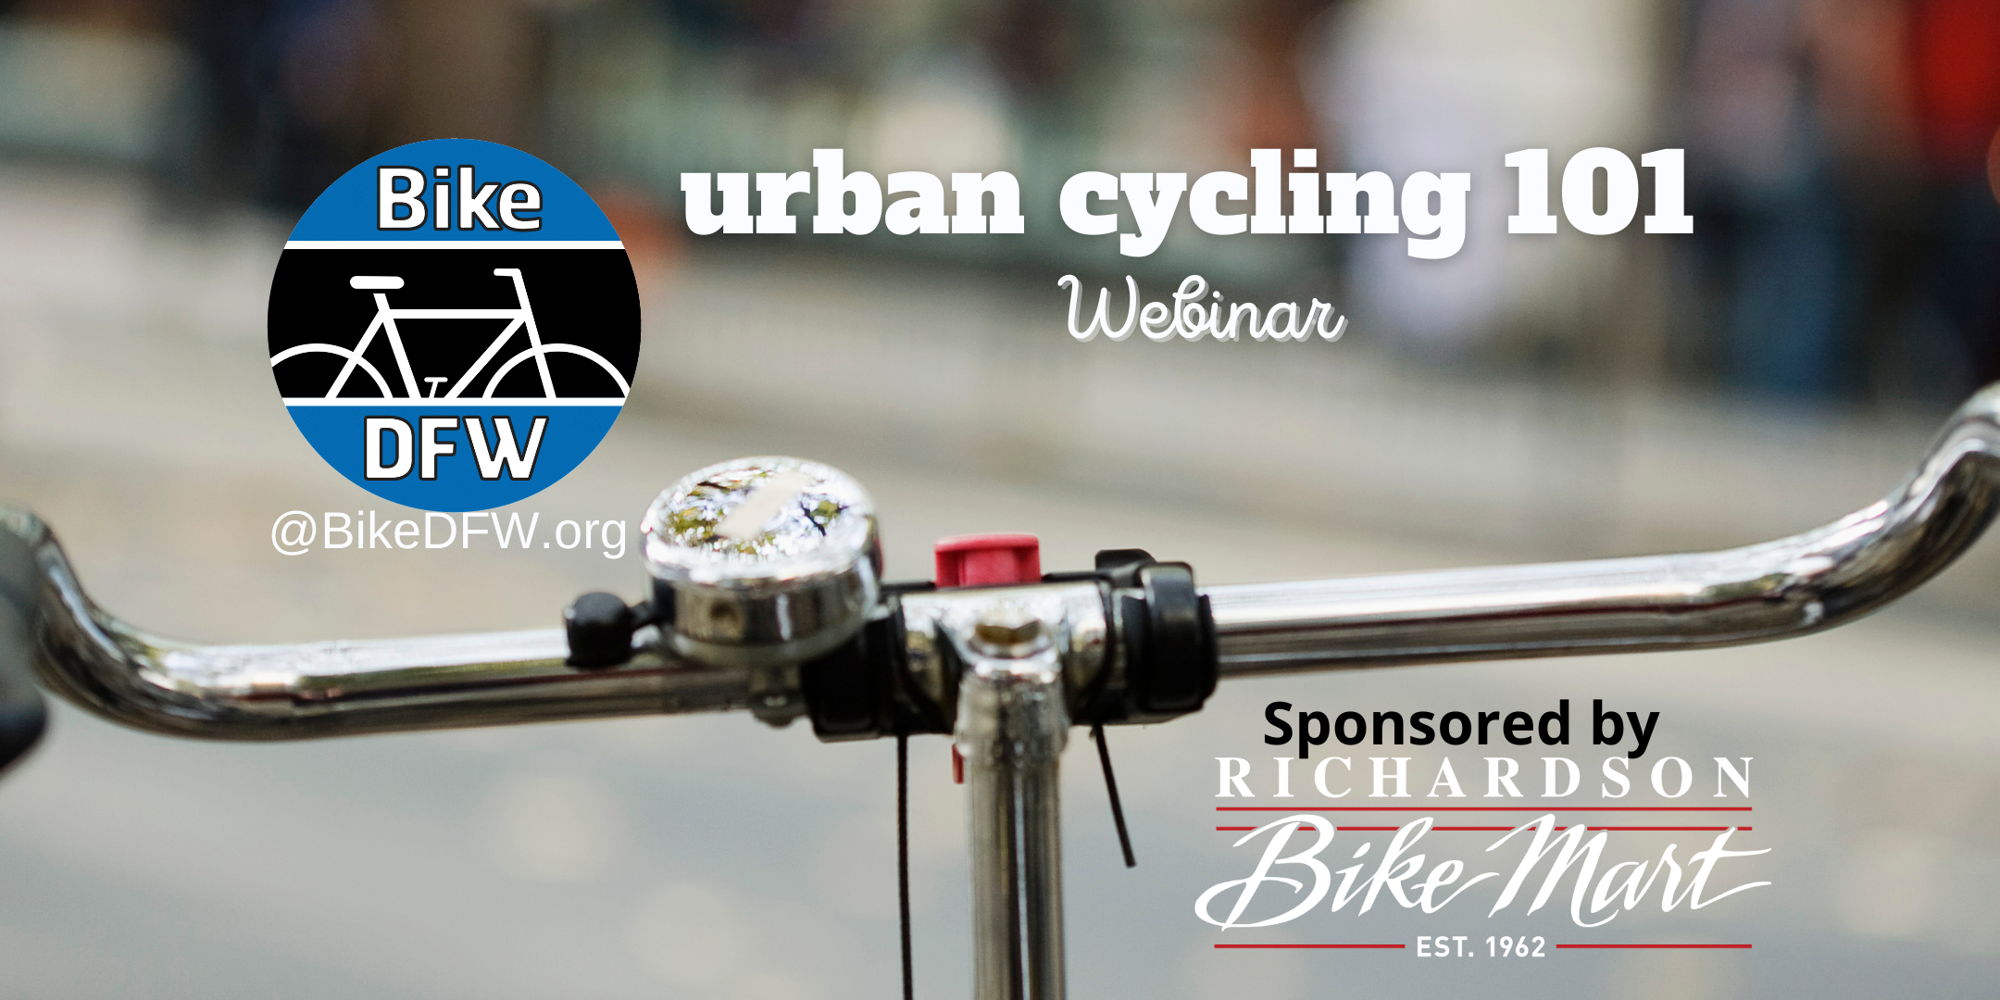 BikeDFW Urban Cycling 101 Webinar promotional image